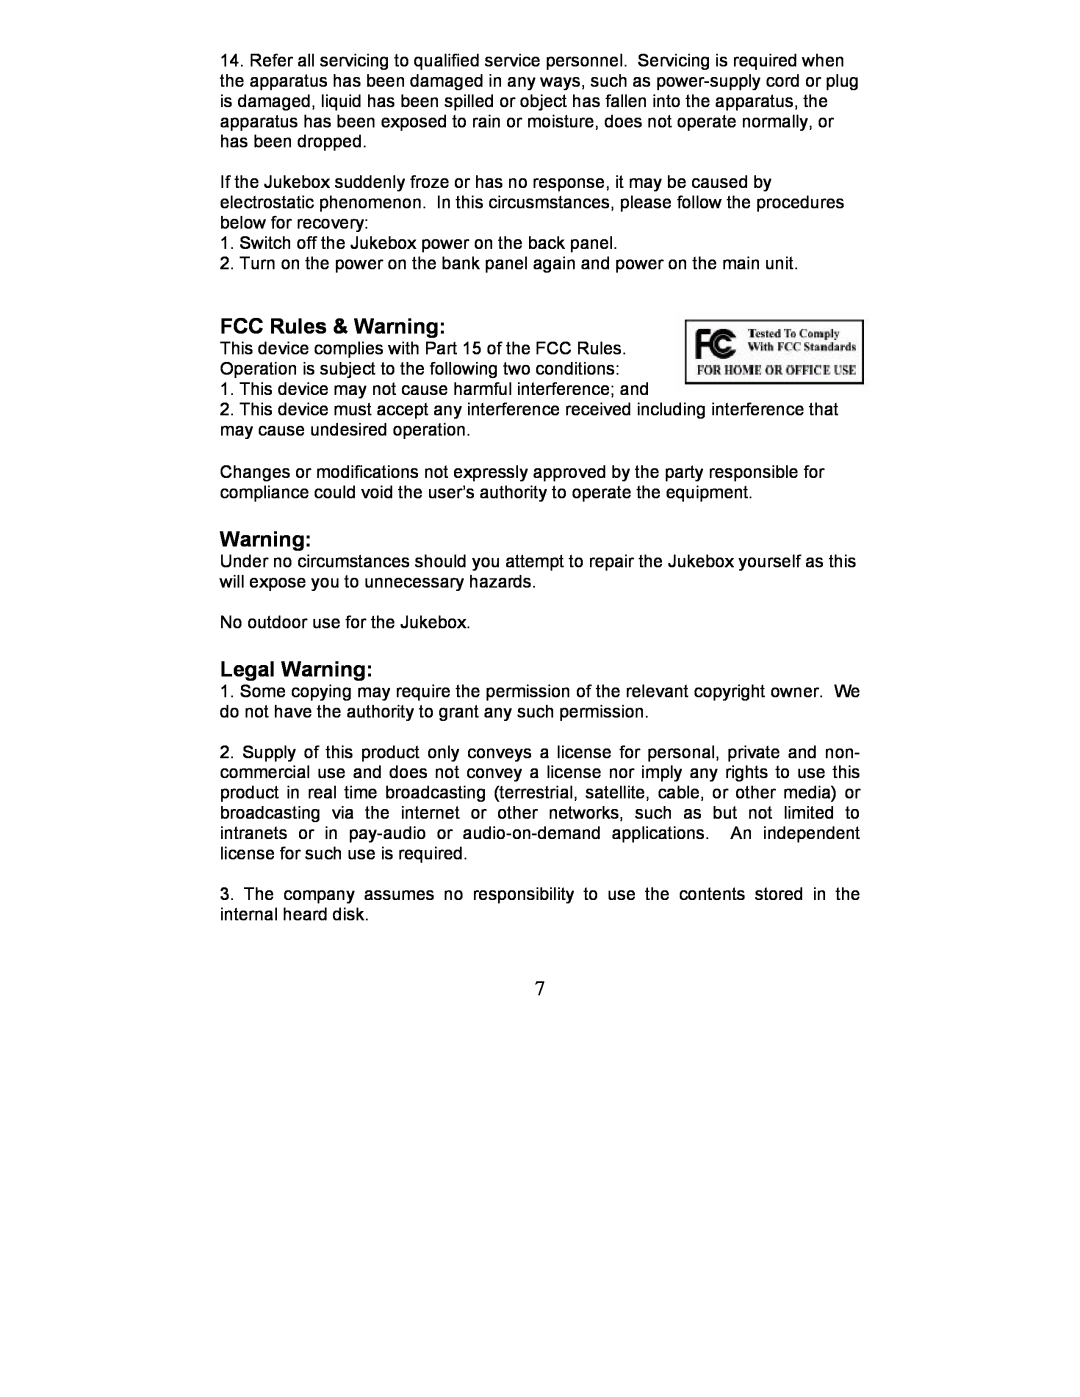 Perception Digital PD - 450 - 01 user manual FCC Rules & Warning, Legal Warning 